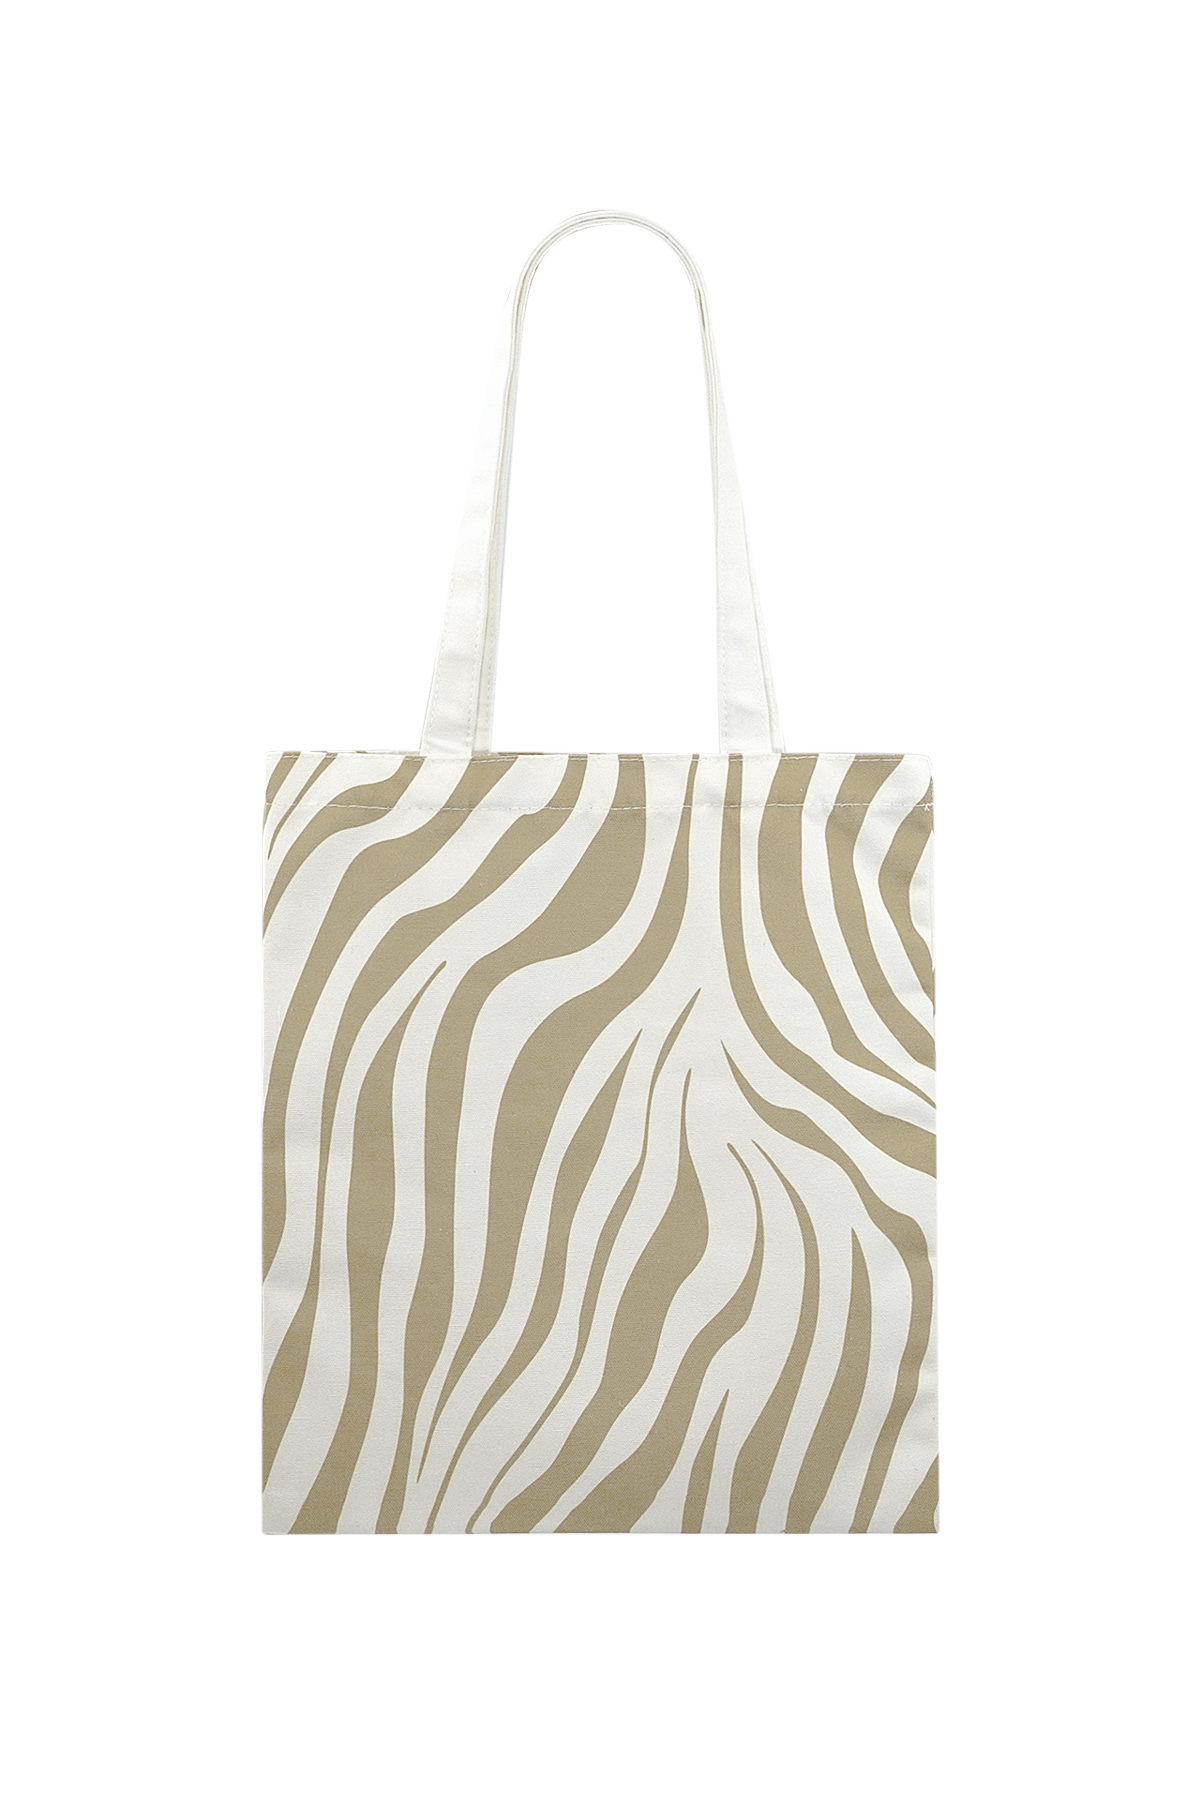 Kanvas shopper zebra desenli - bej h5 